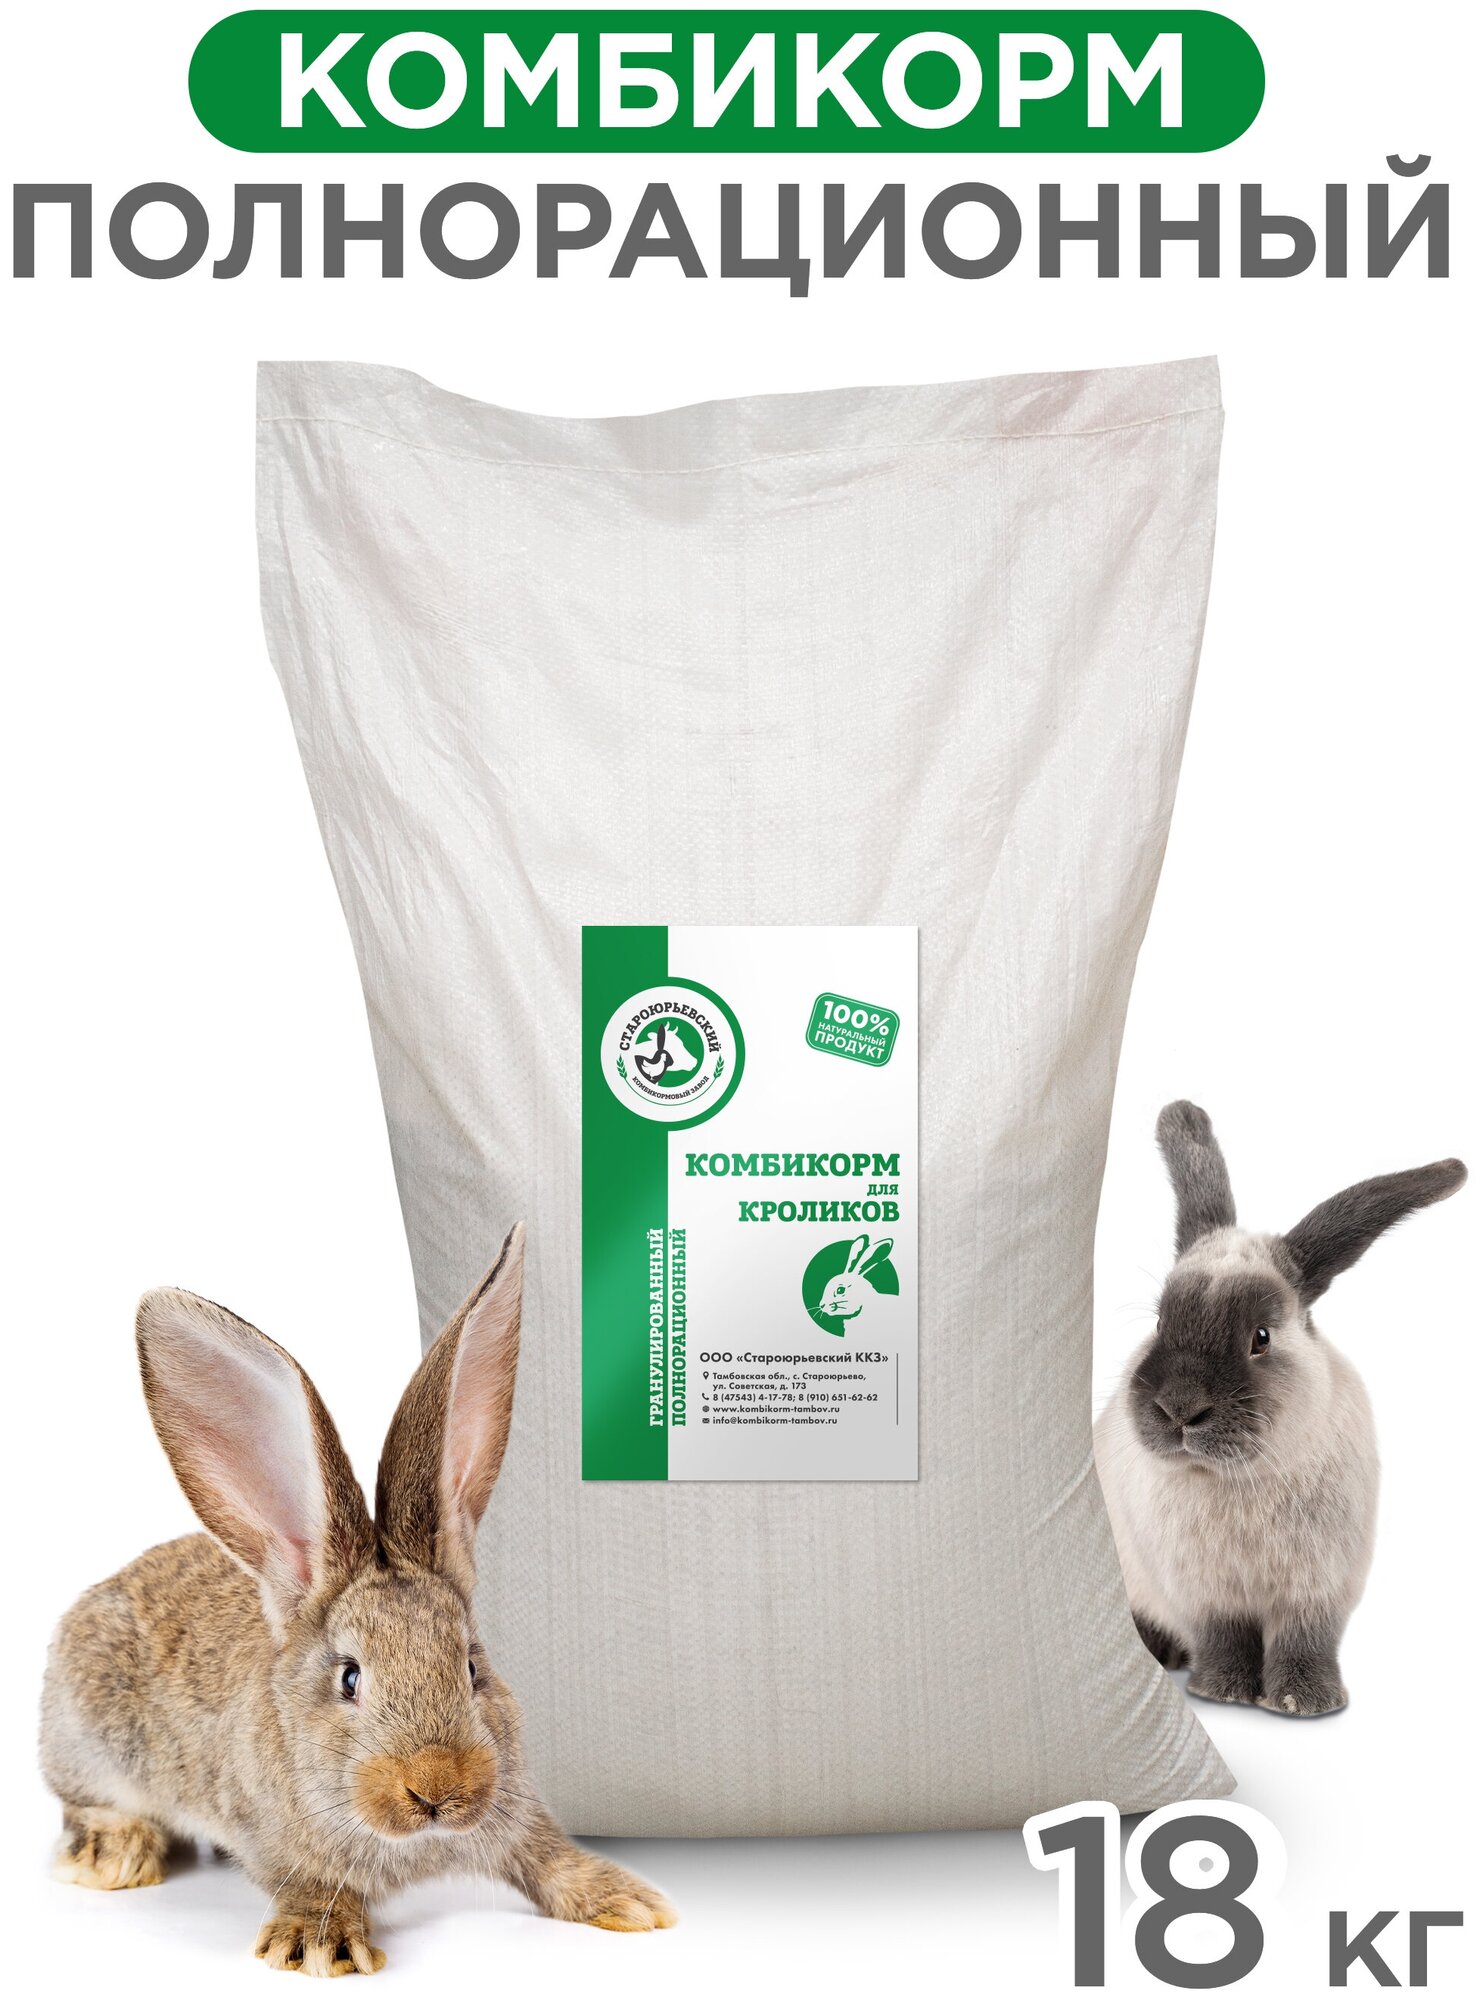 Комбикорм полнорационный ПК-90 для молодняка кроликов, сккз, 18 кг, гранула